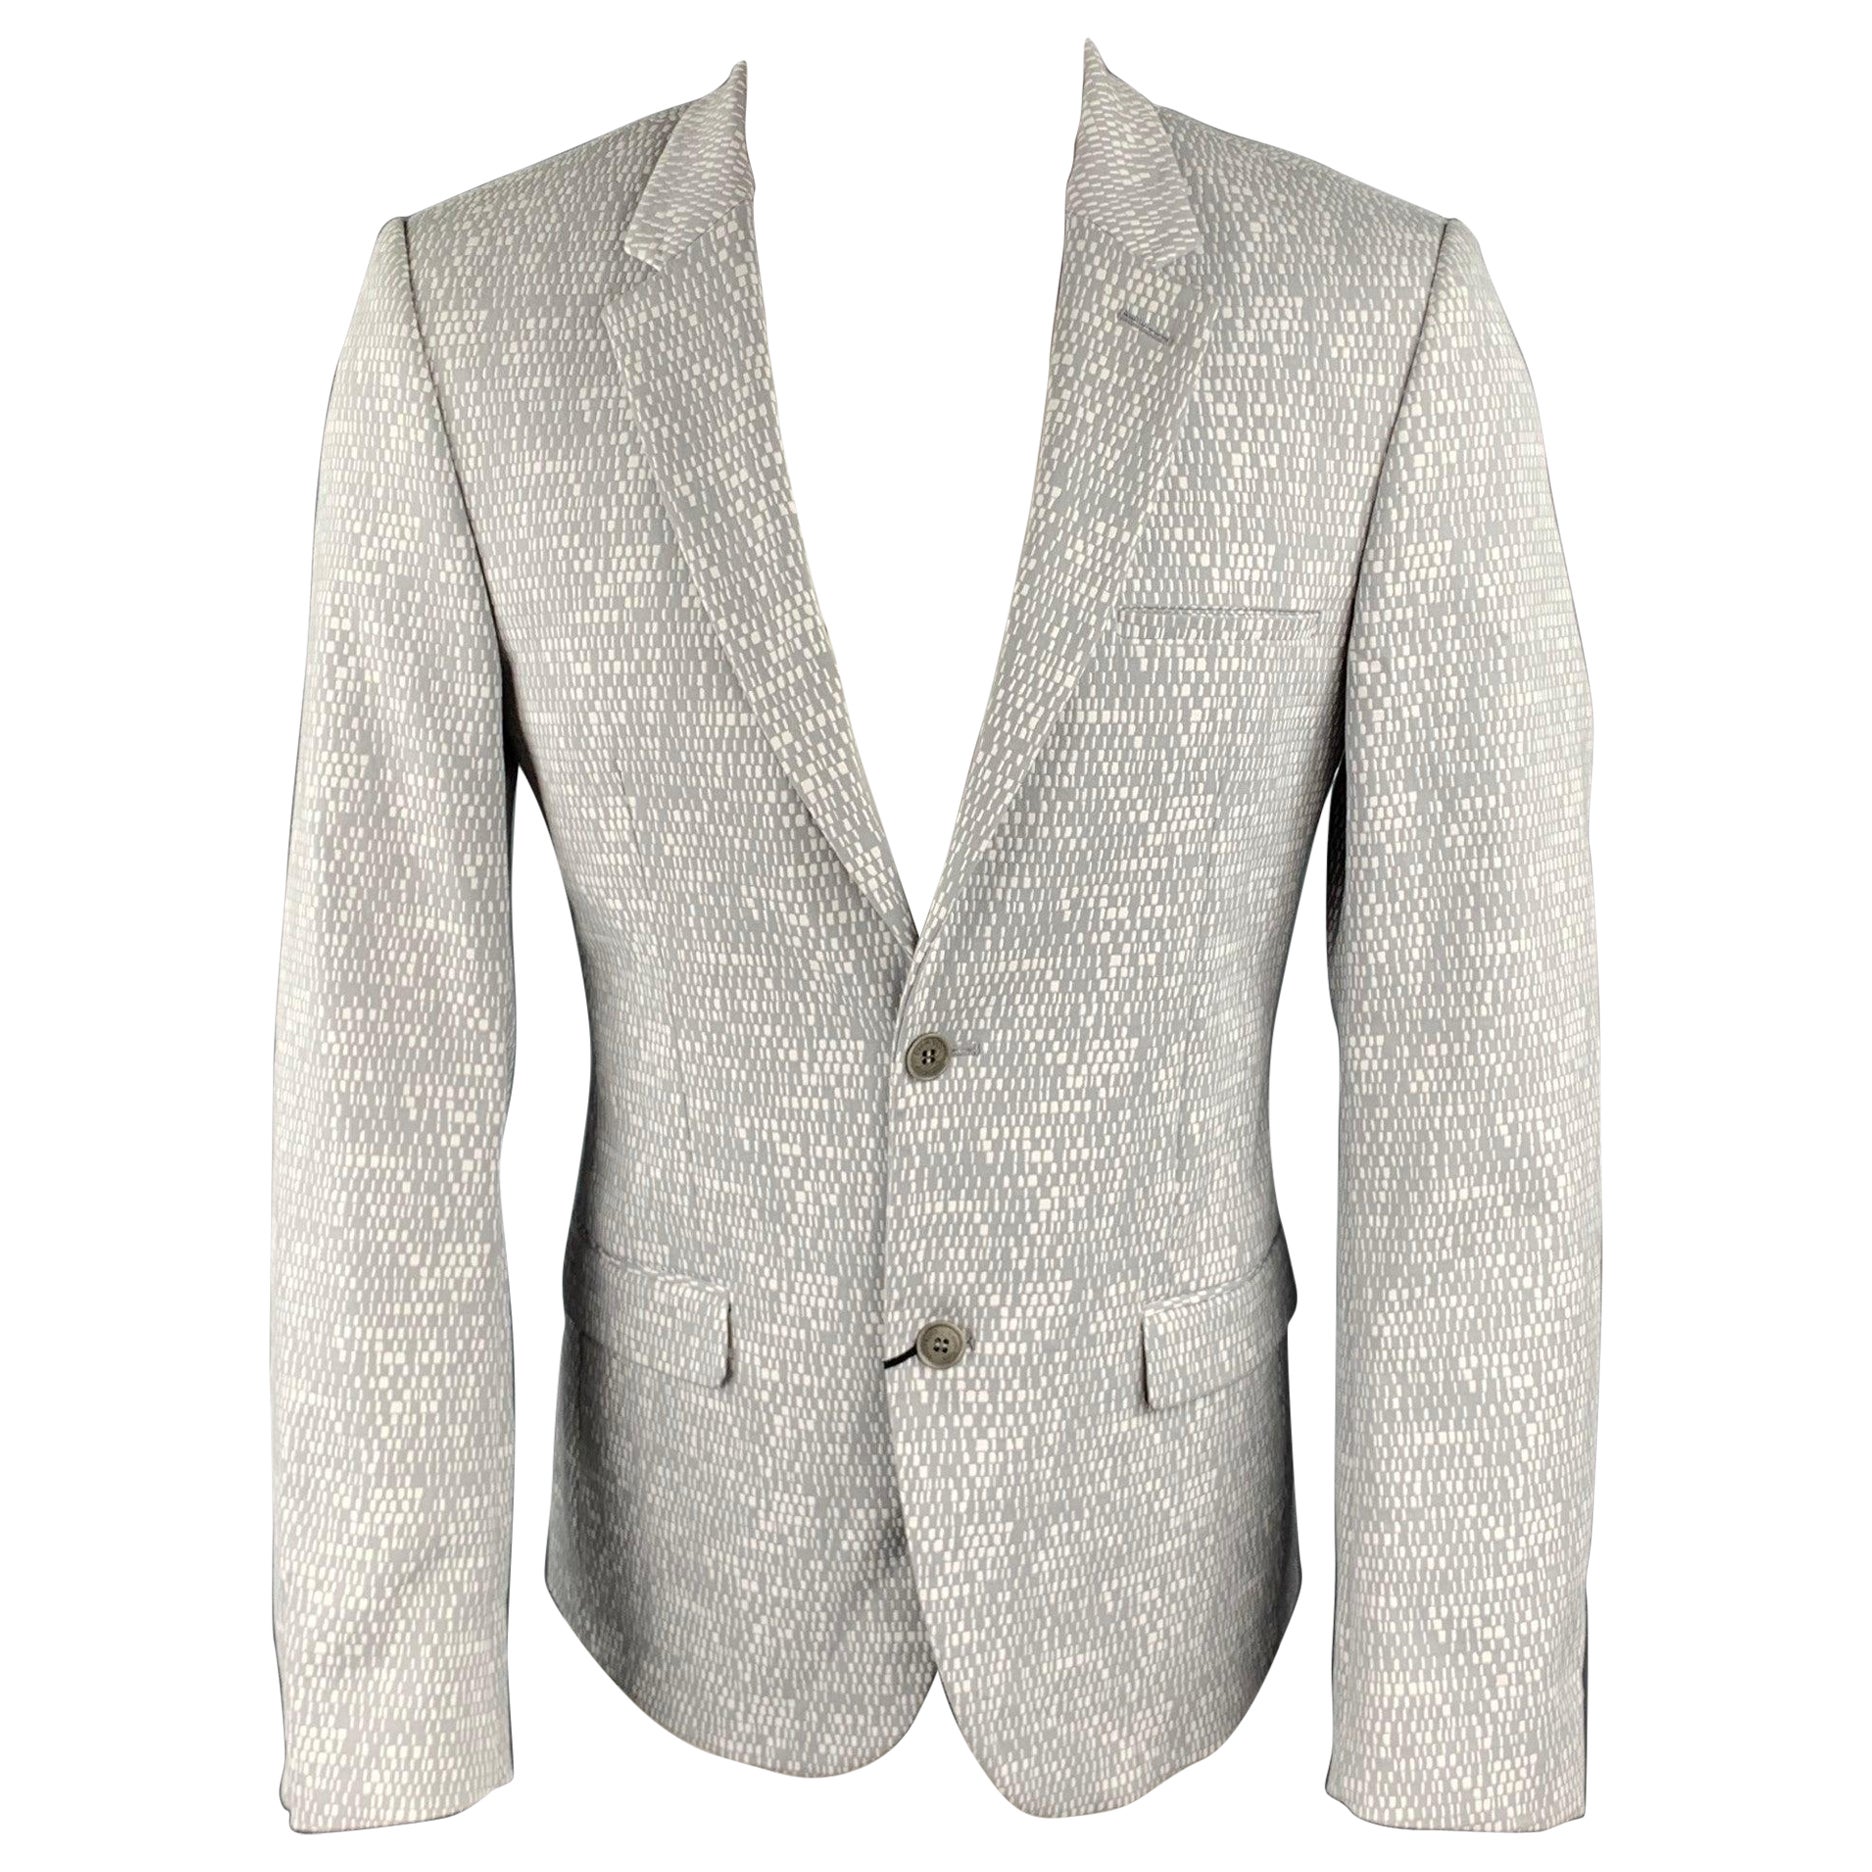 CALVIN KLEIN COLLECTION Size 36 Grey & White Woven Notch Lapel Sport Coat For Sale